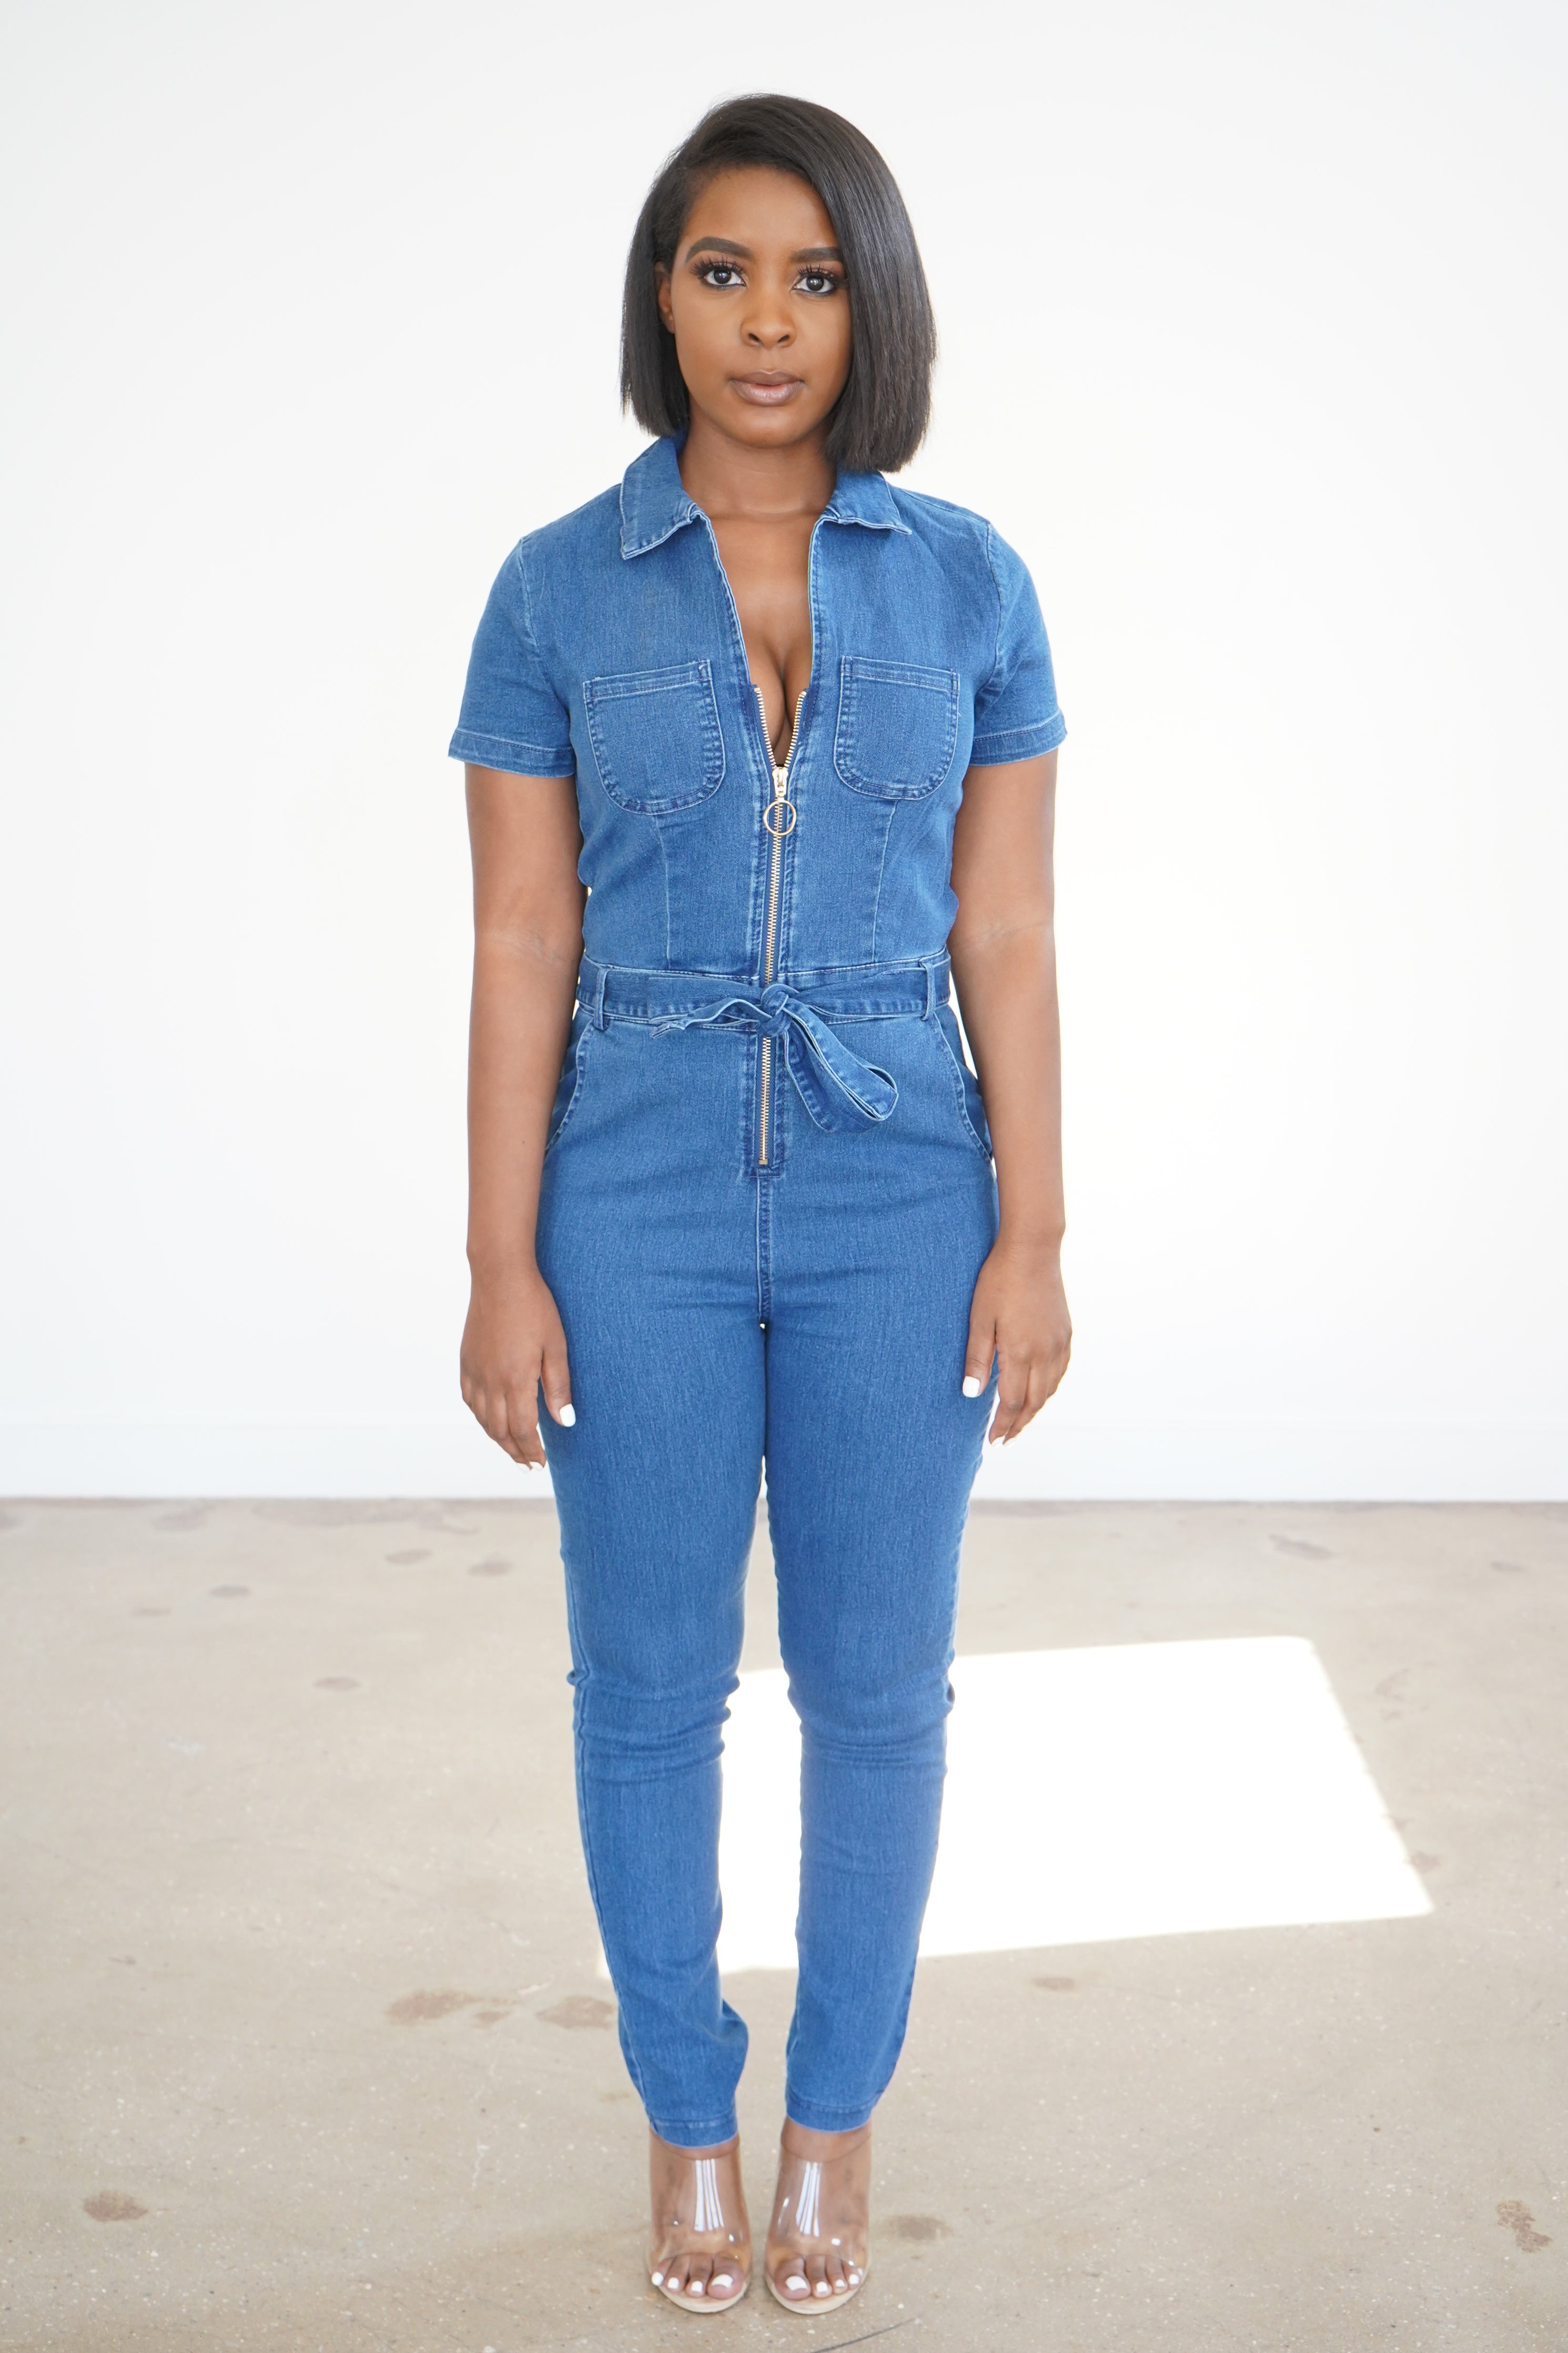 Buy StyleStone Women's Blue Denim Jumpsuit (3875BluRehaJSXXL) at Amazon.in